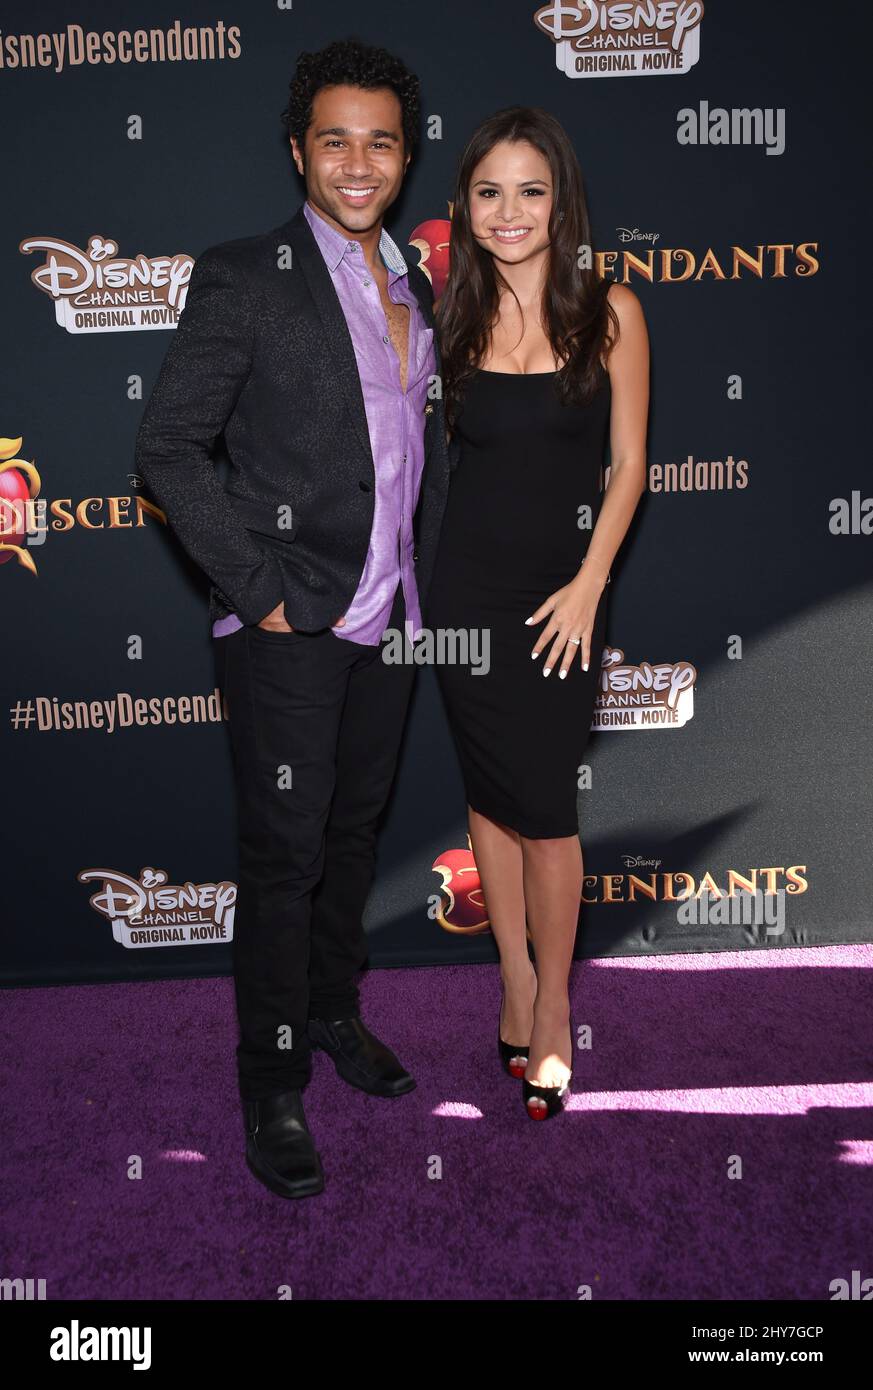 Corbin Bleu & Sasha Clements attending the premiere of Descendants in Burbank, California. Stock Photo